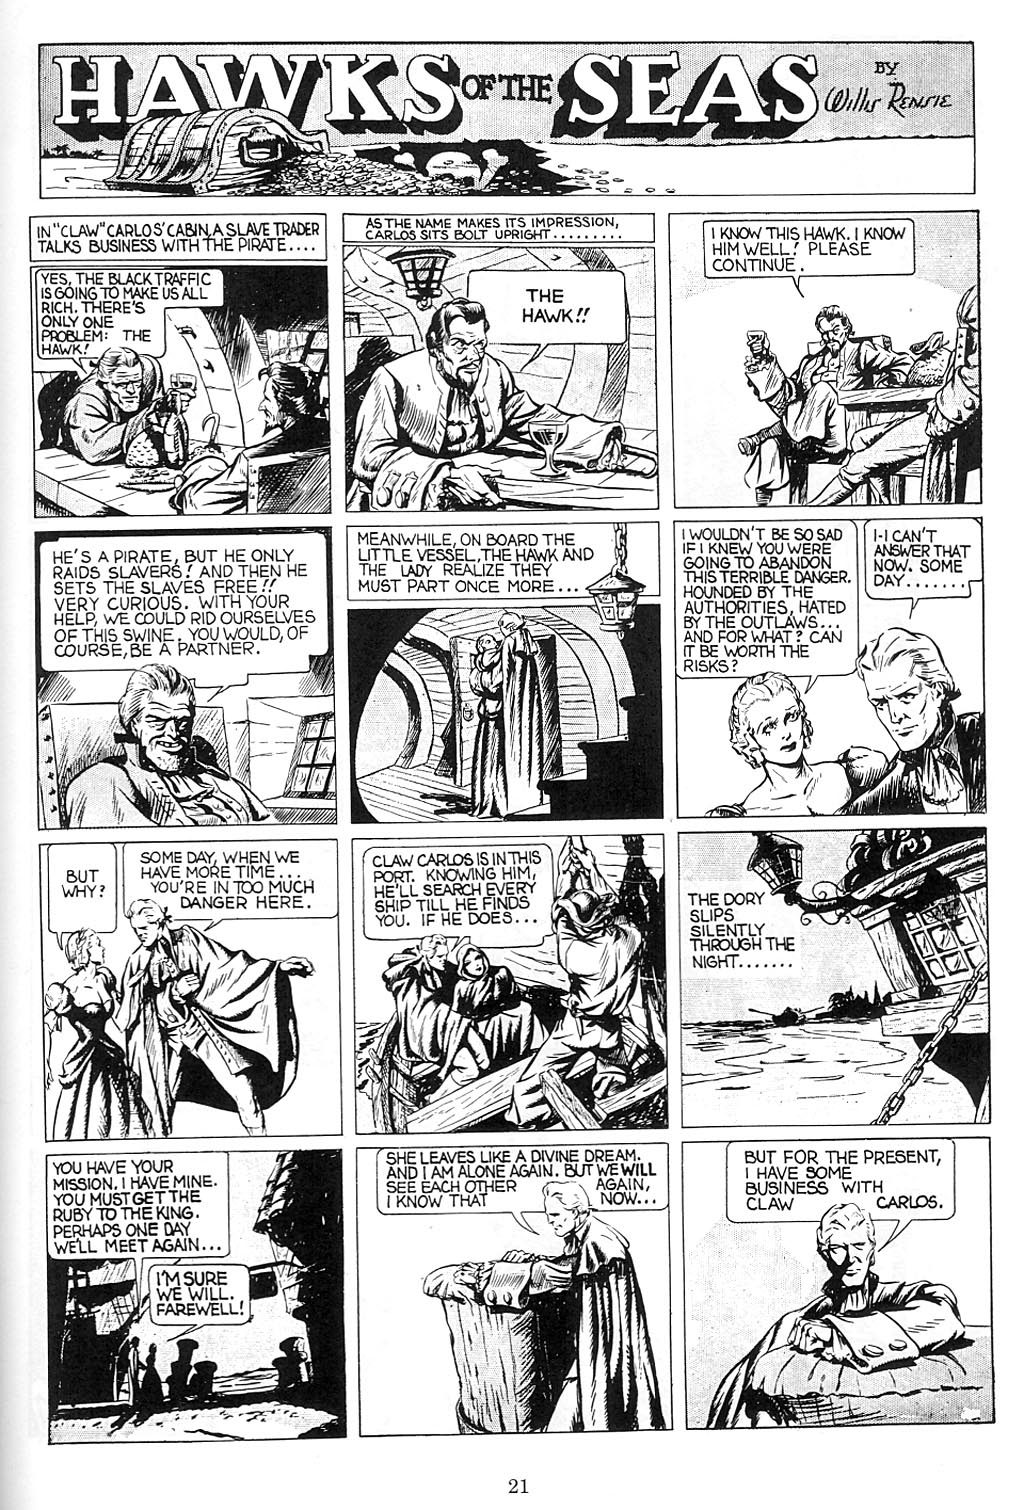 Read online Will Eisner's Hawks of the Seas comic -  Issue # TPB - 22